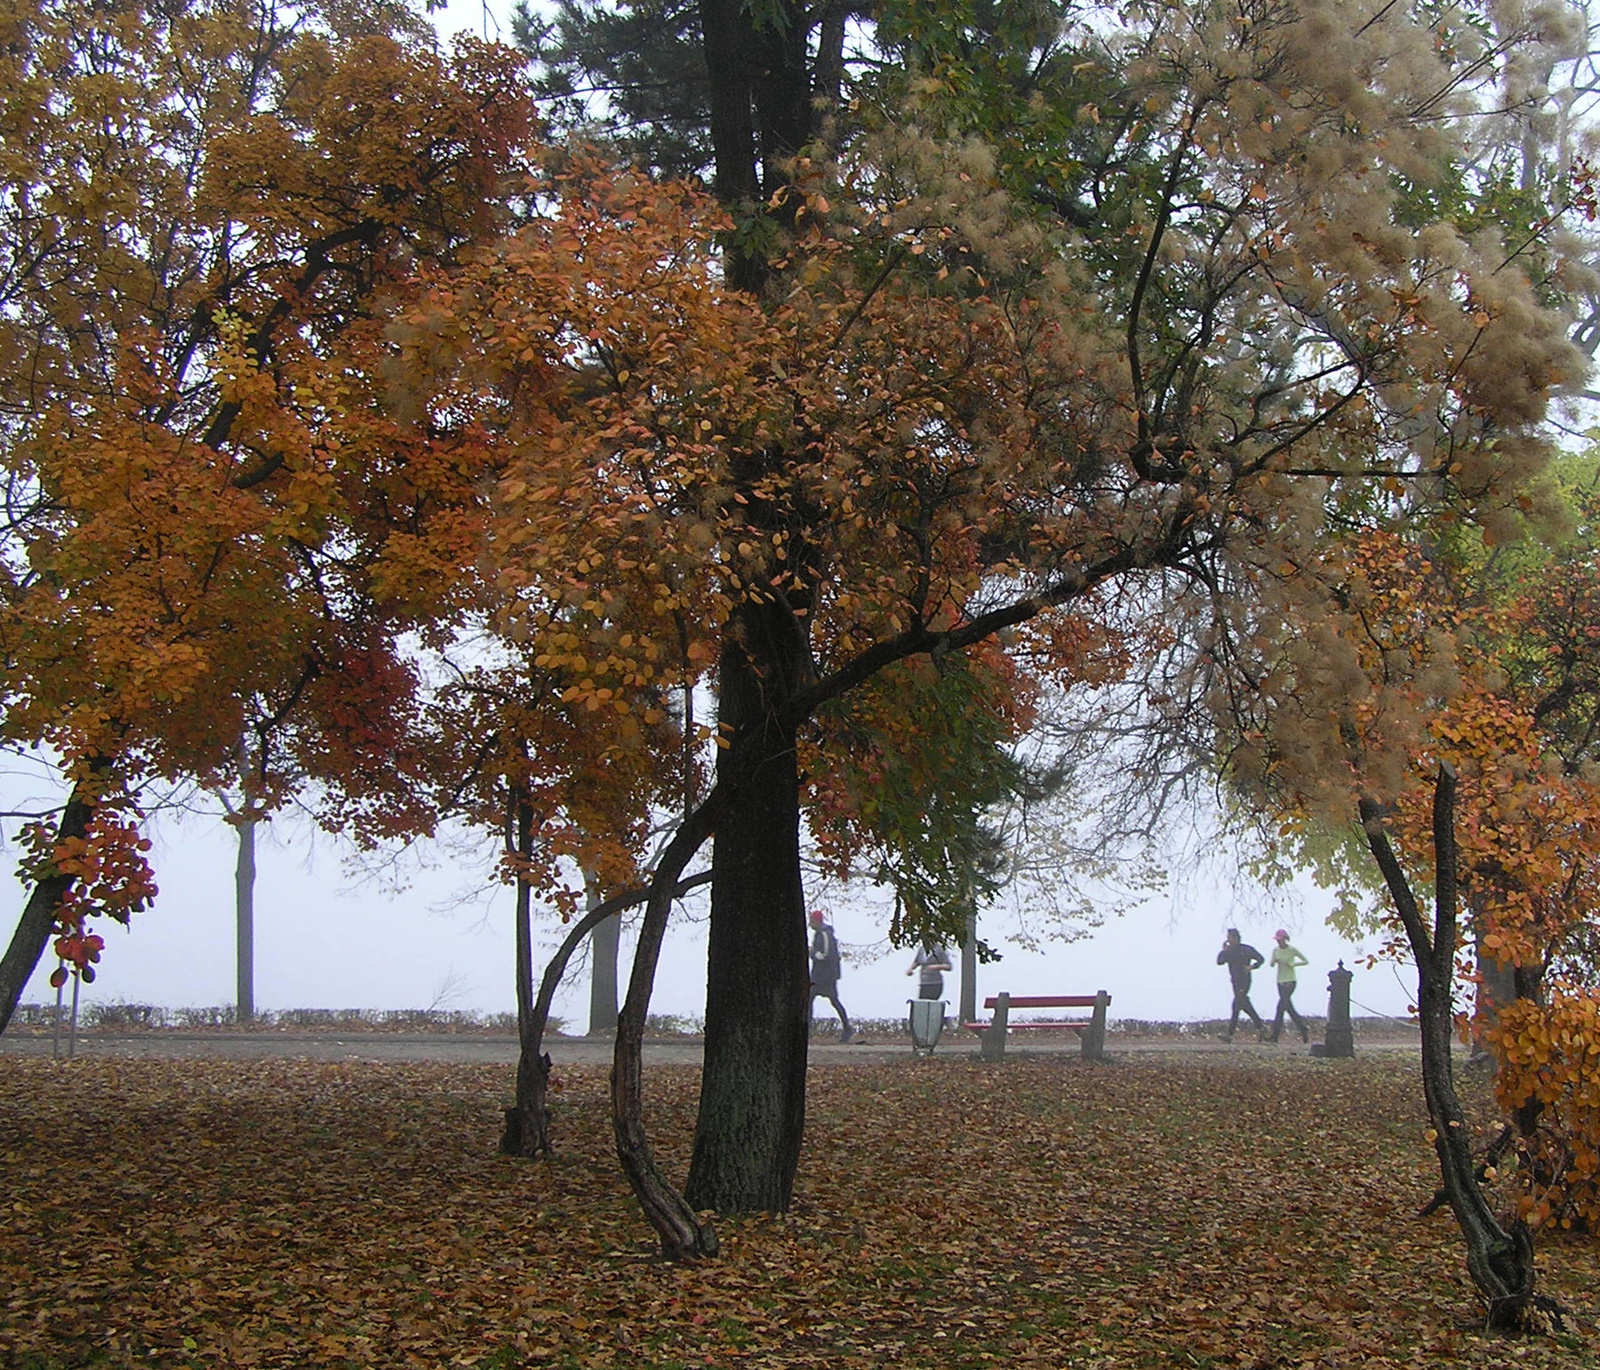 reggeli sport a ködös Duna mellett